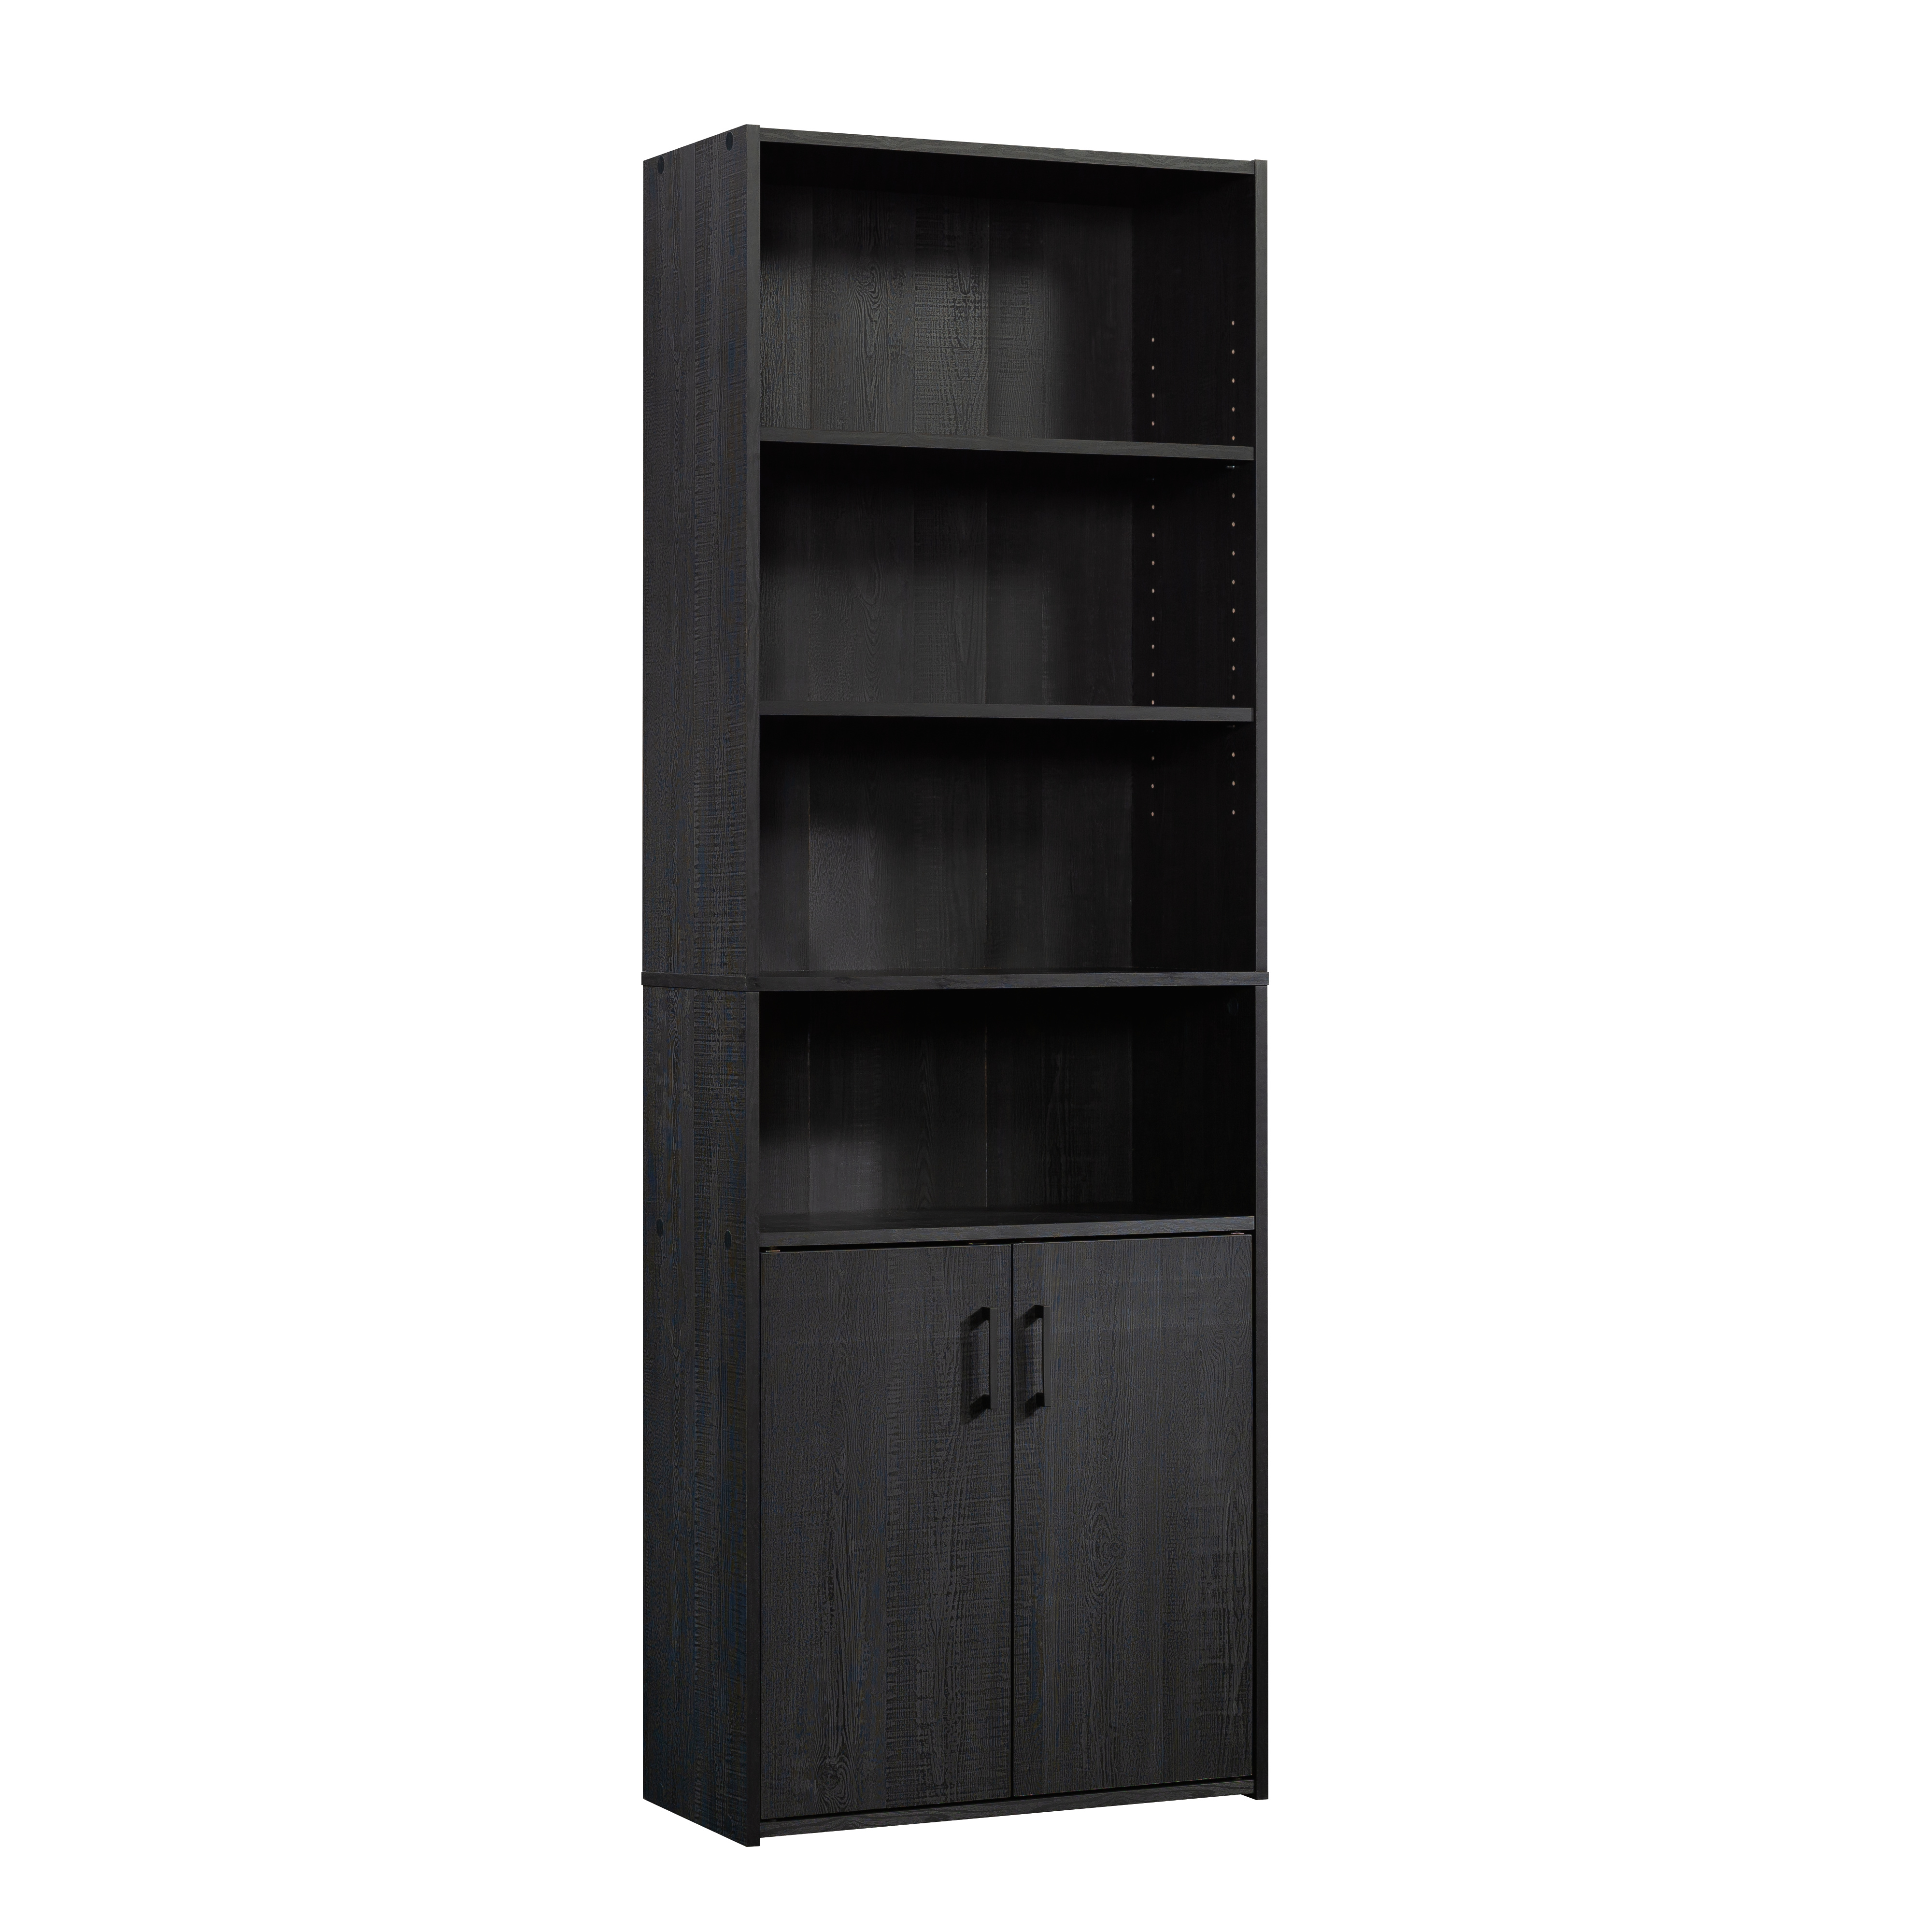 Mainstays Traditional 5 Shelf Bookcase with Doors, Black Finish - image 5 of 10